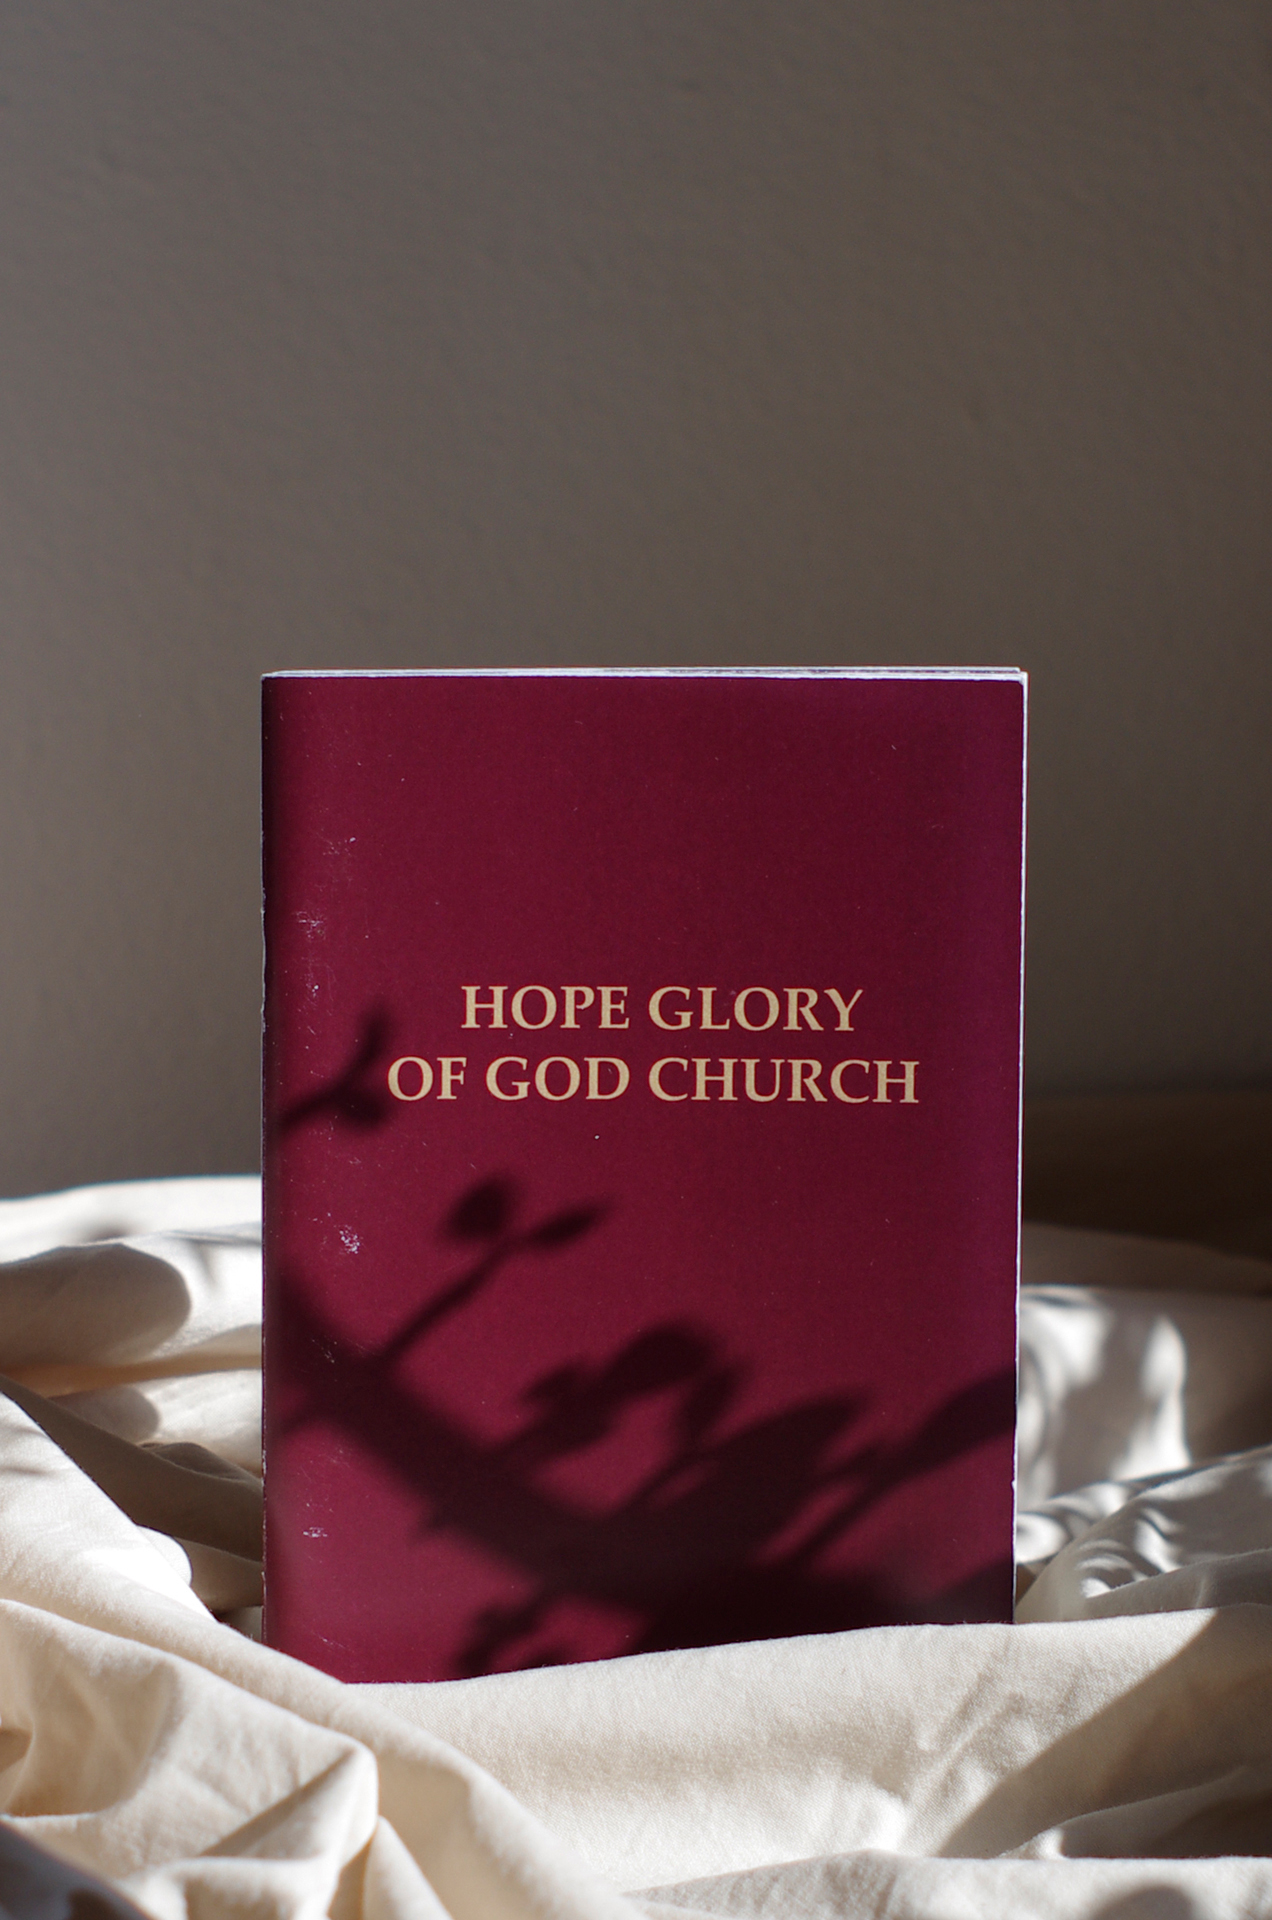 Hope glory of God church